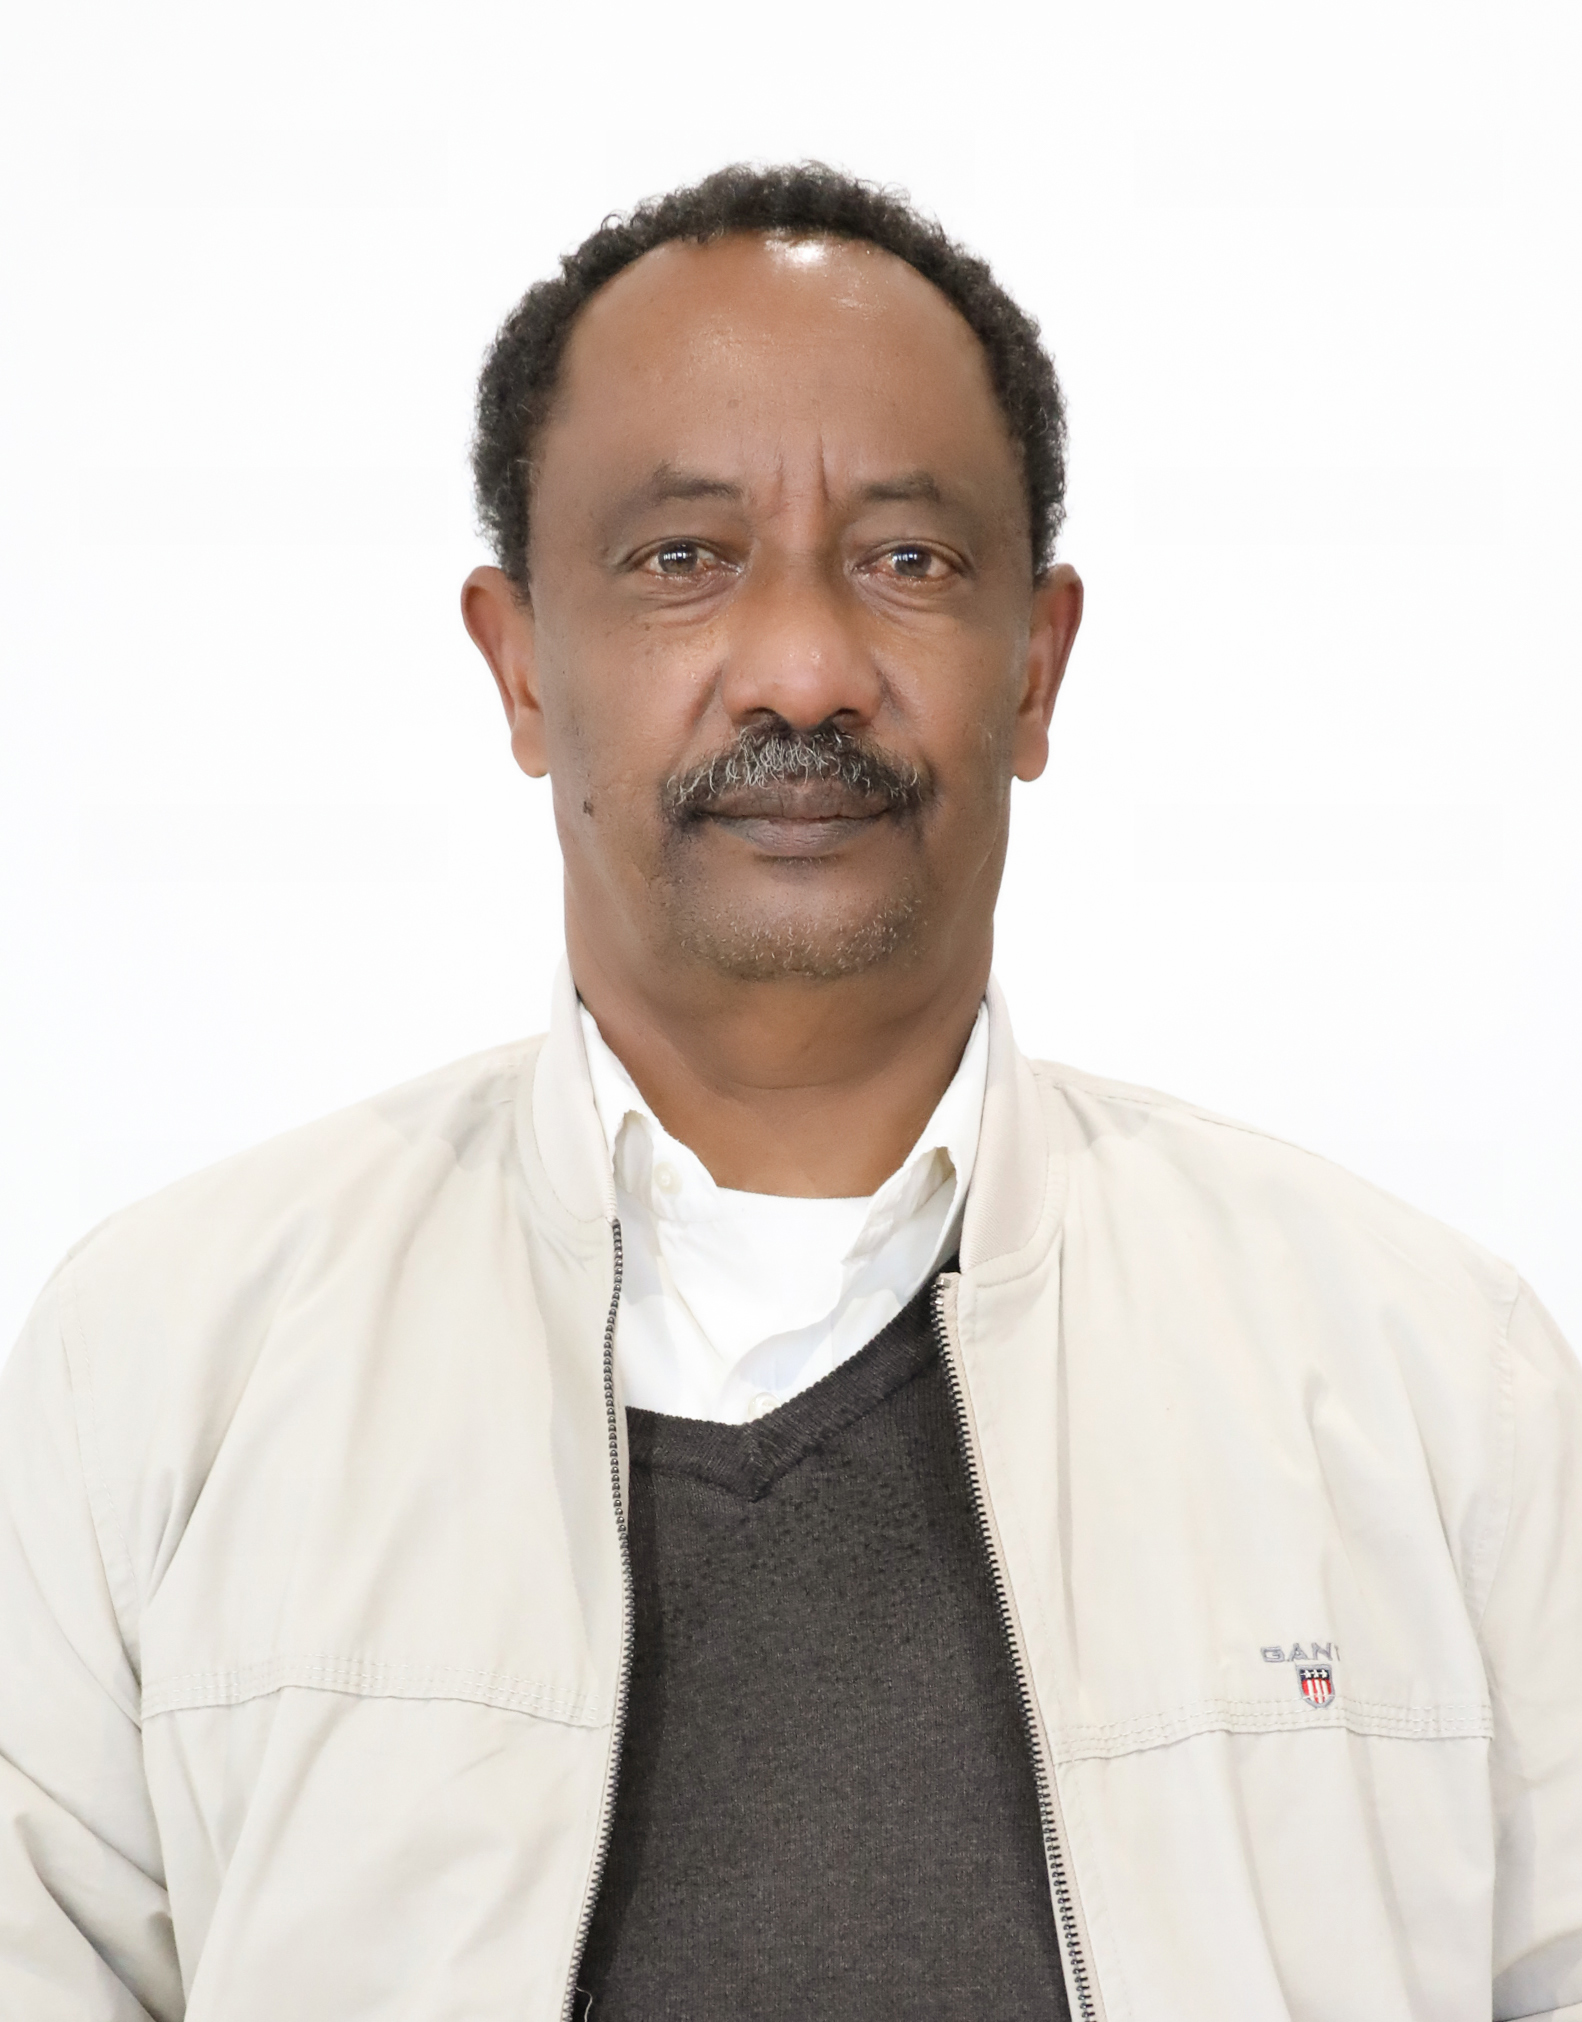 Hon. Dr. Zegeye Muluye Asres